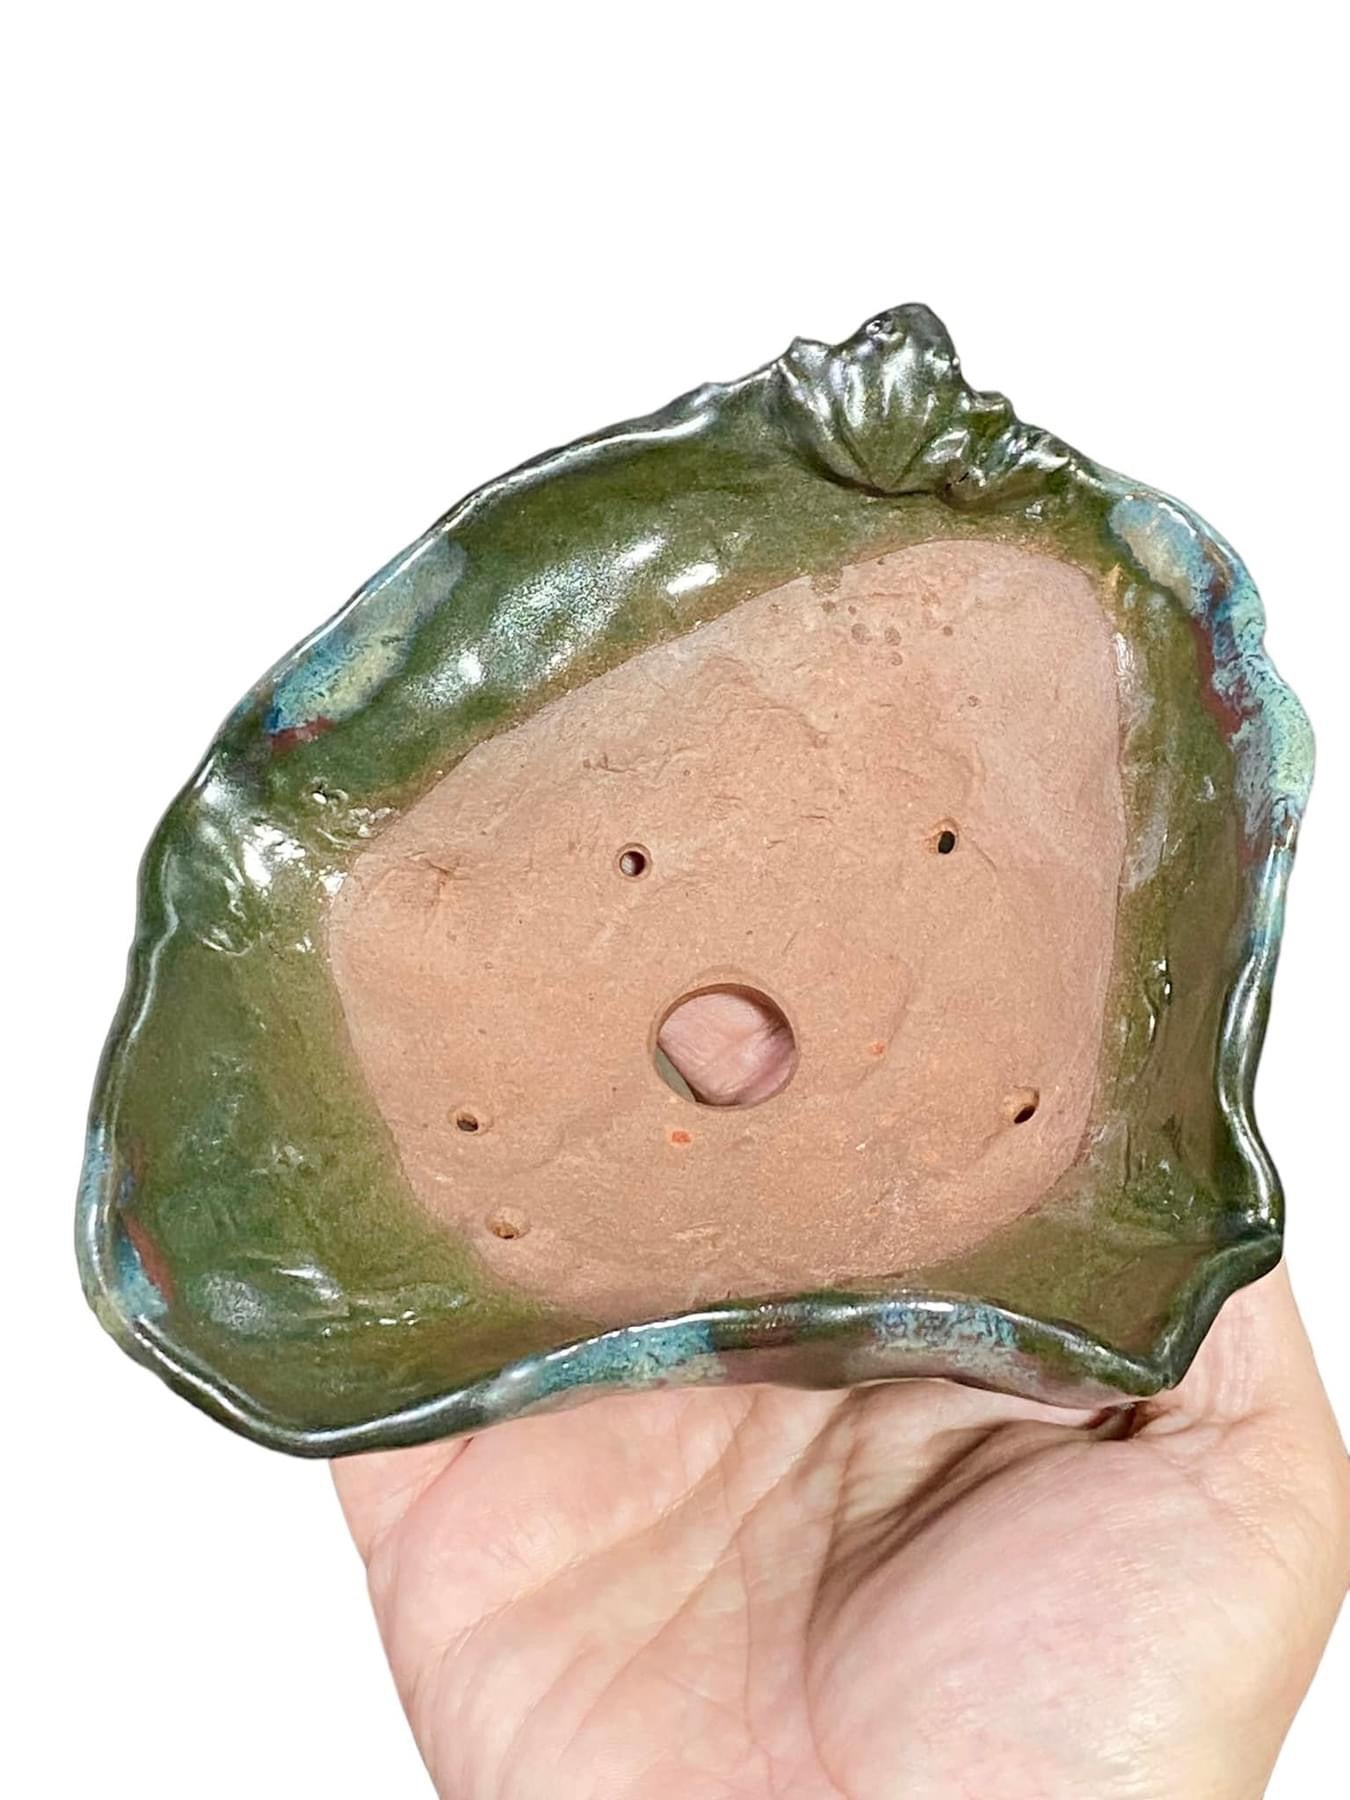 Masashi - Frog on a Floppy Bowl Bonsai or Accent Pot